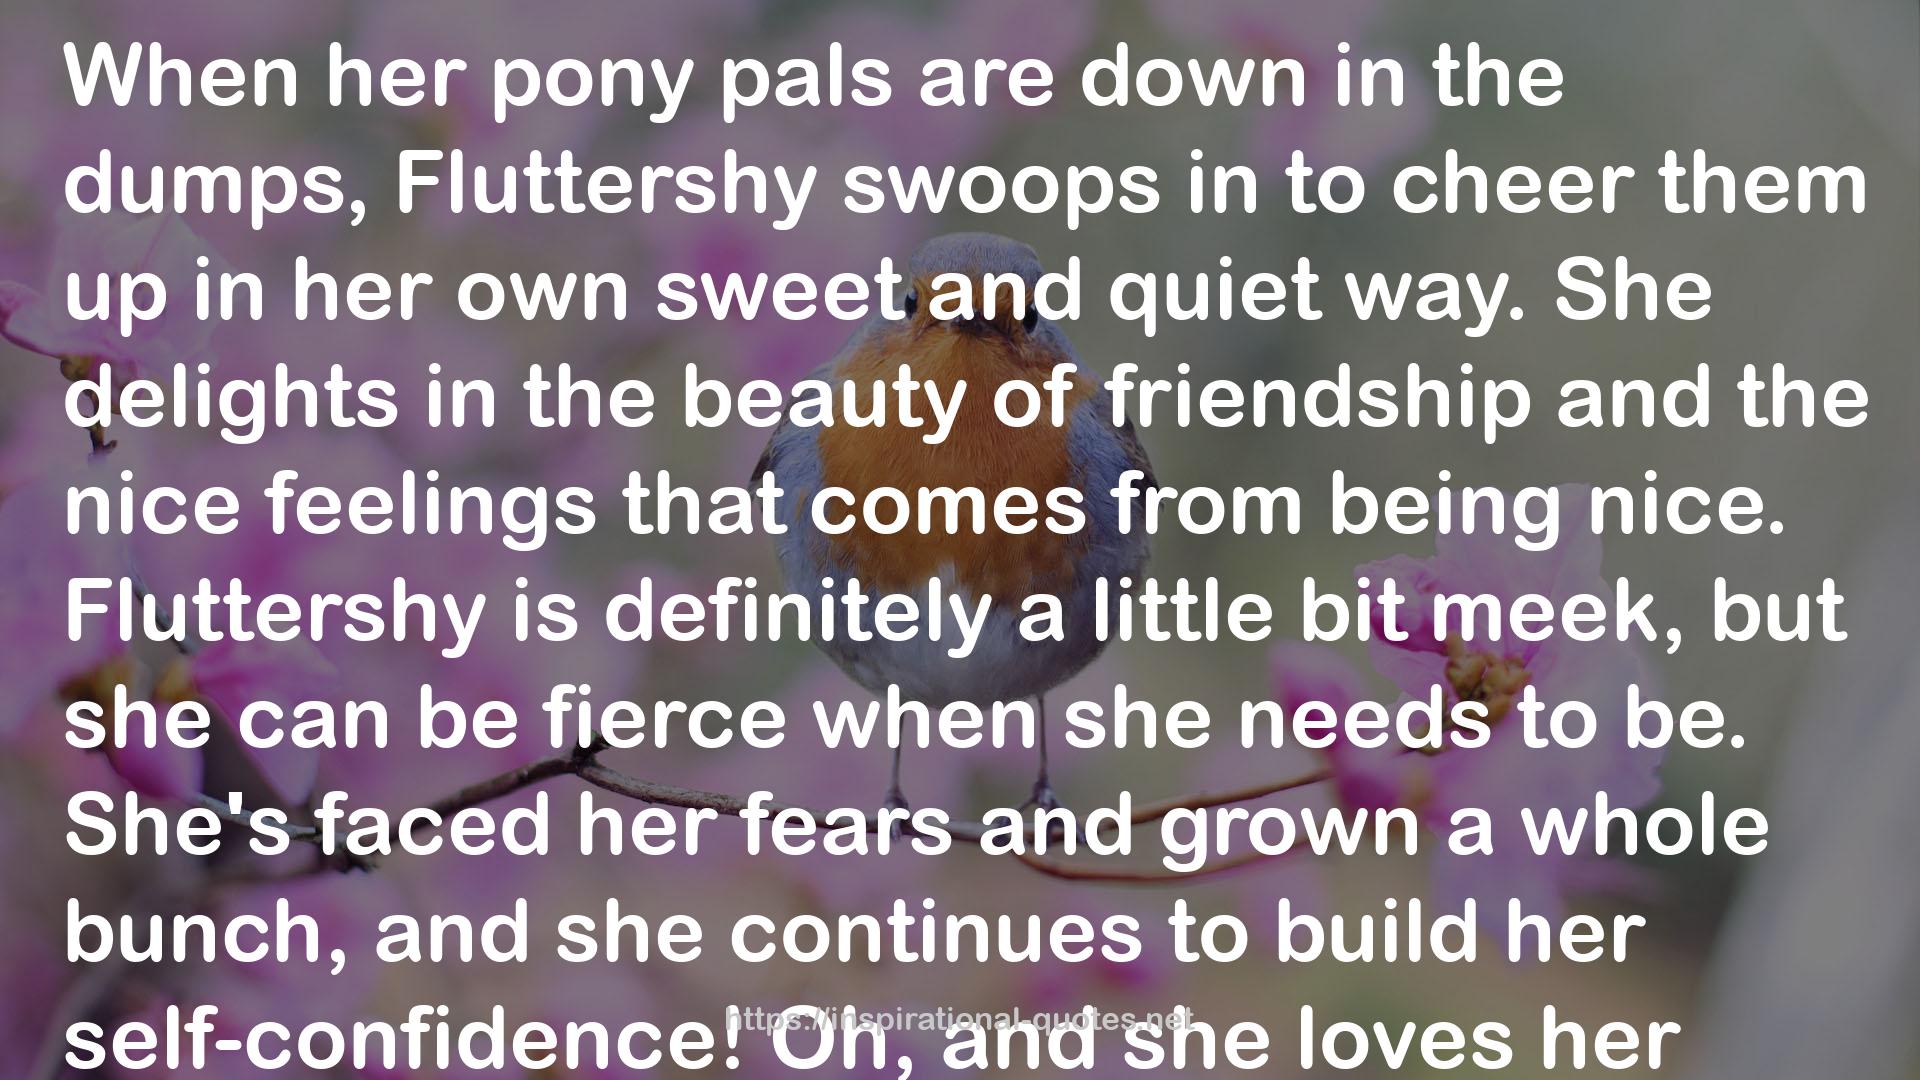 My Little Pony: The Elements of Harmony Vol. II QUOTES